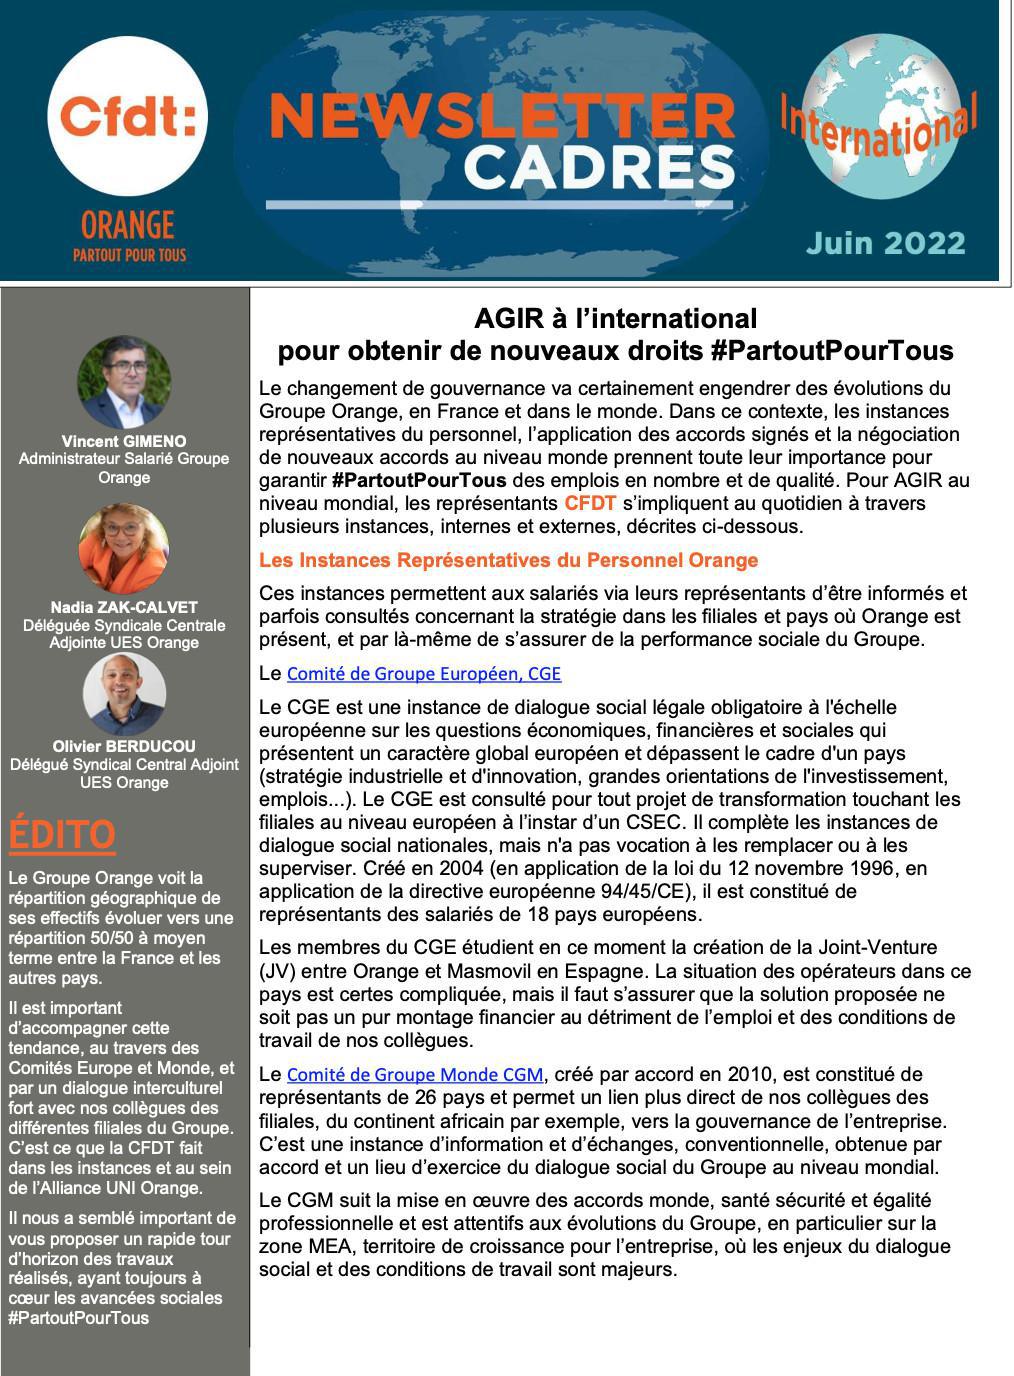 #International - Newsletter Cadres - Juin 2022